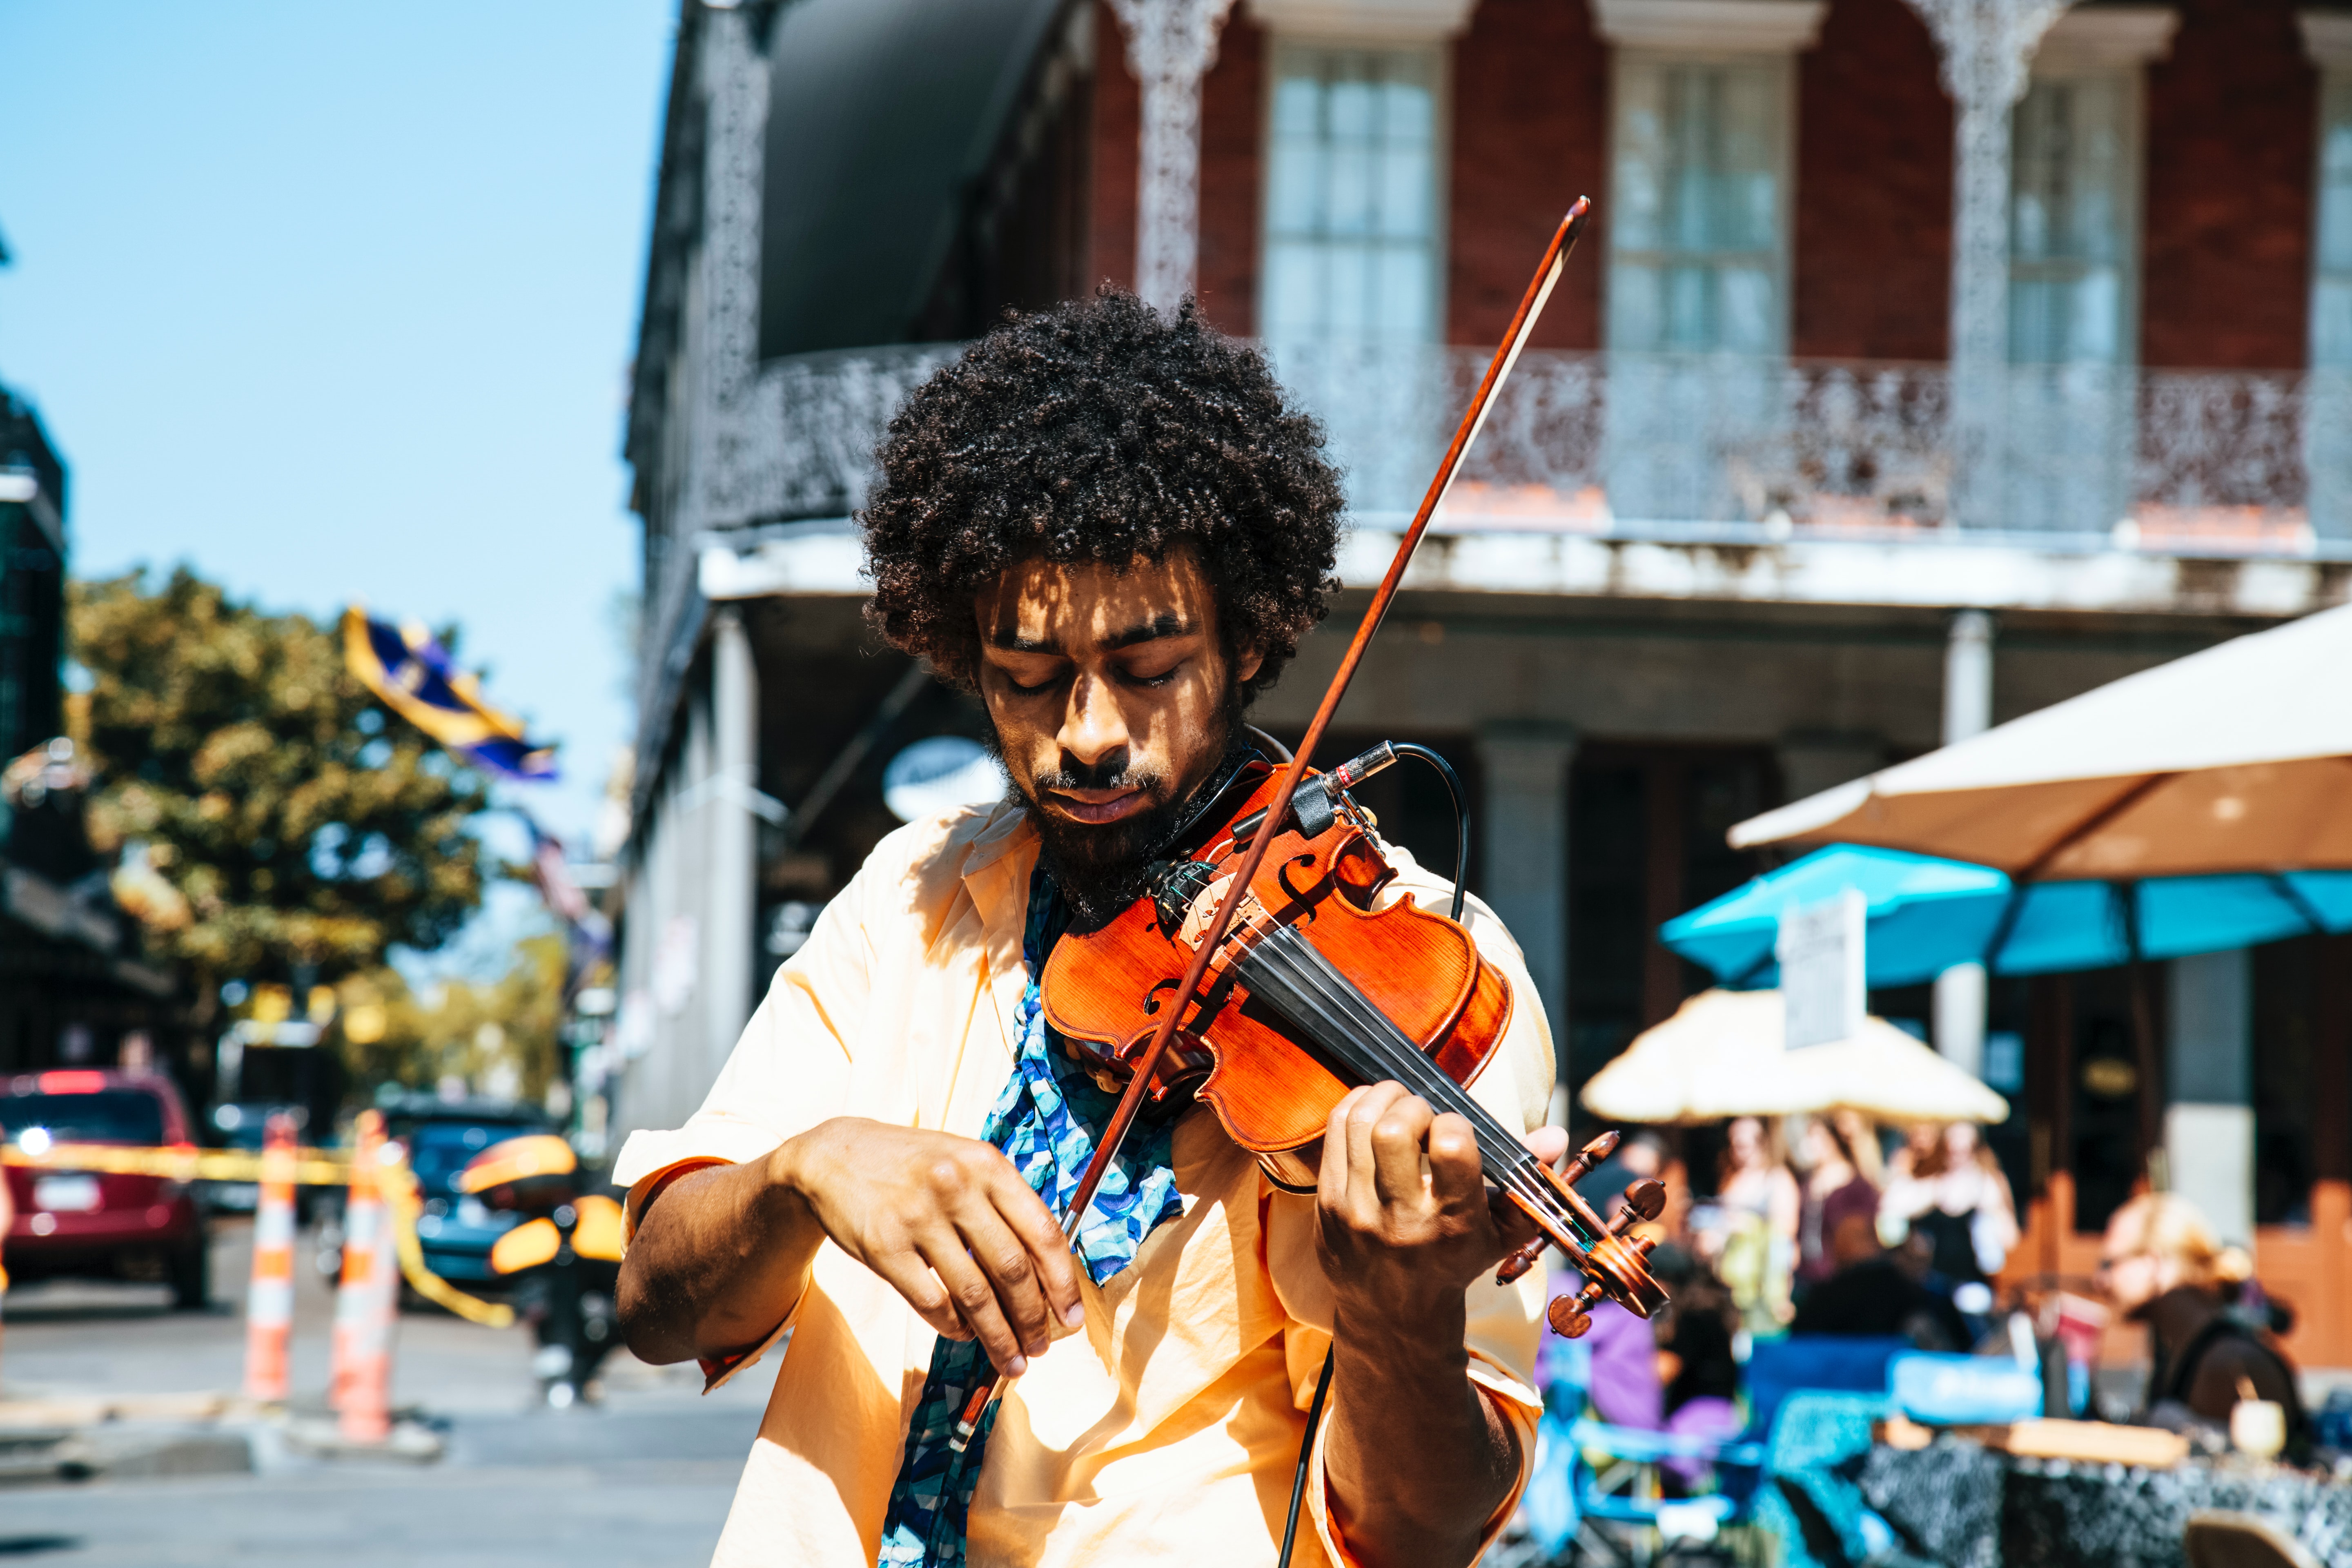 New Orleans street violinist